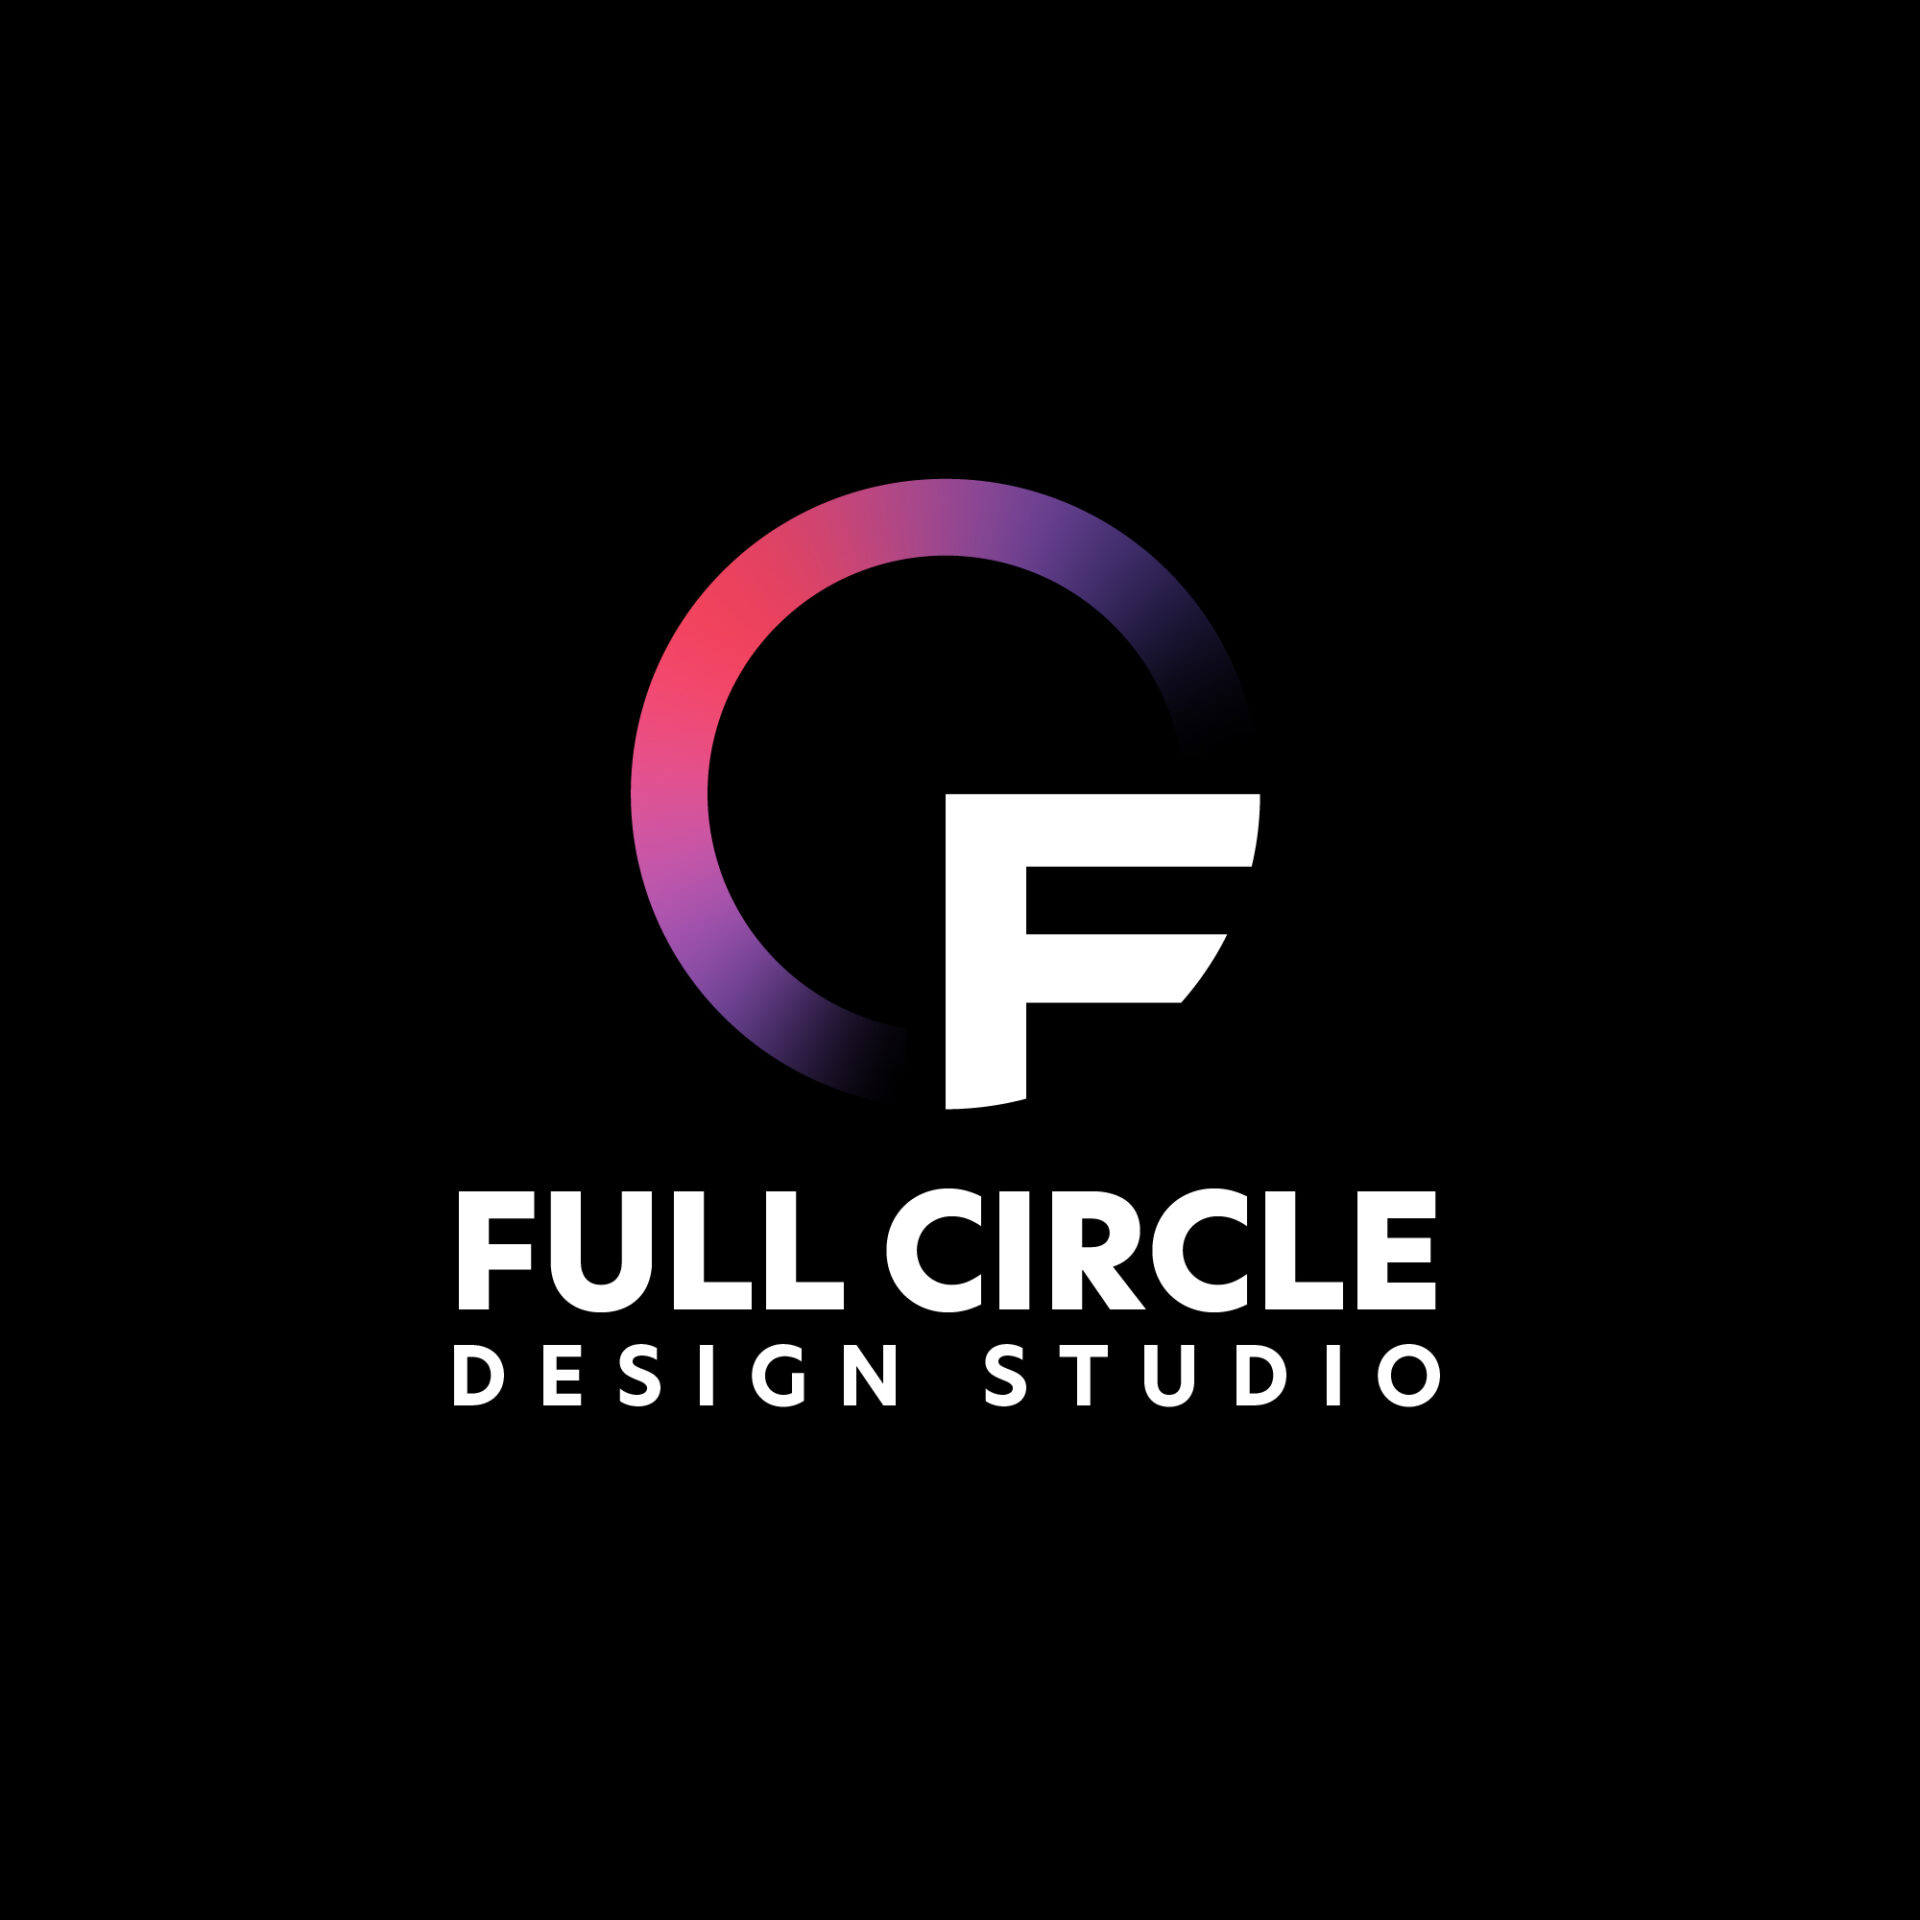 "Full Circle Design Studio" Logo with Pink and Purple Gradient Circle